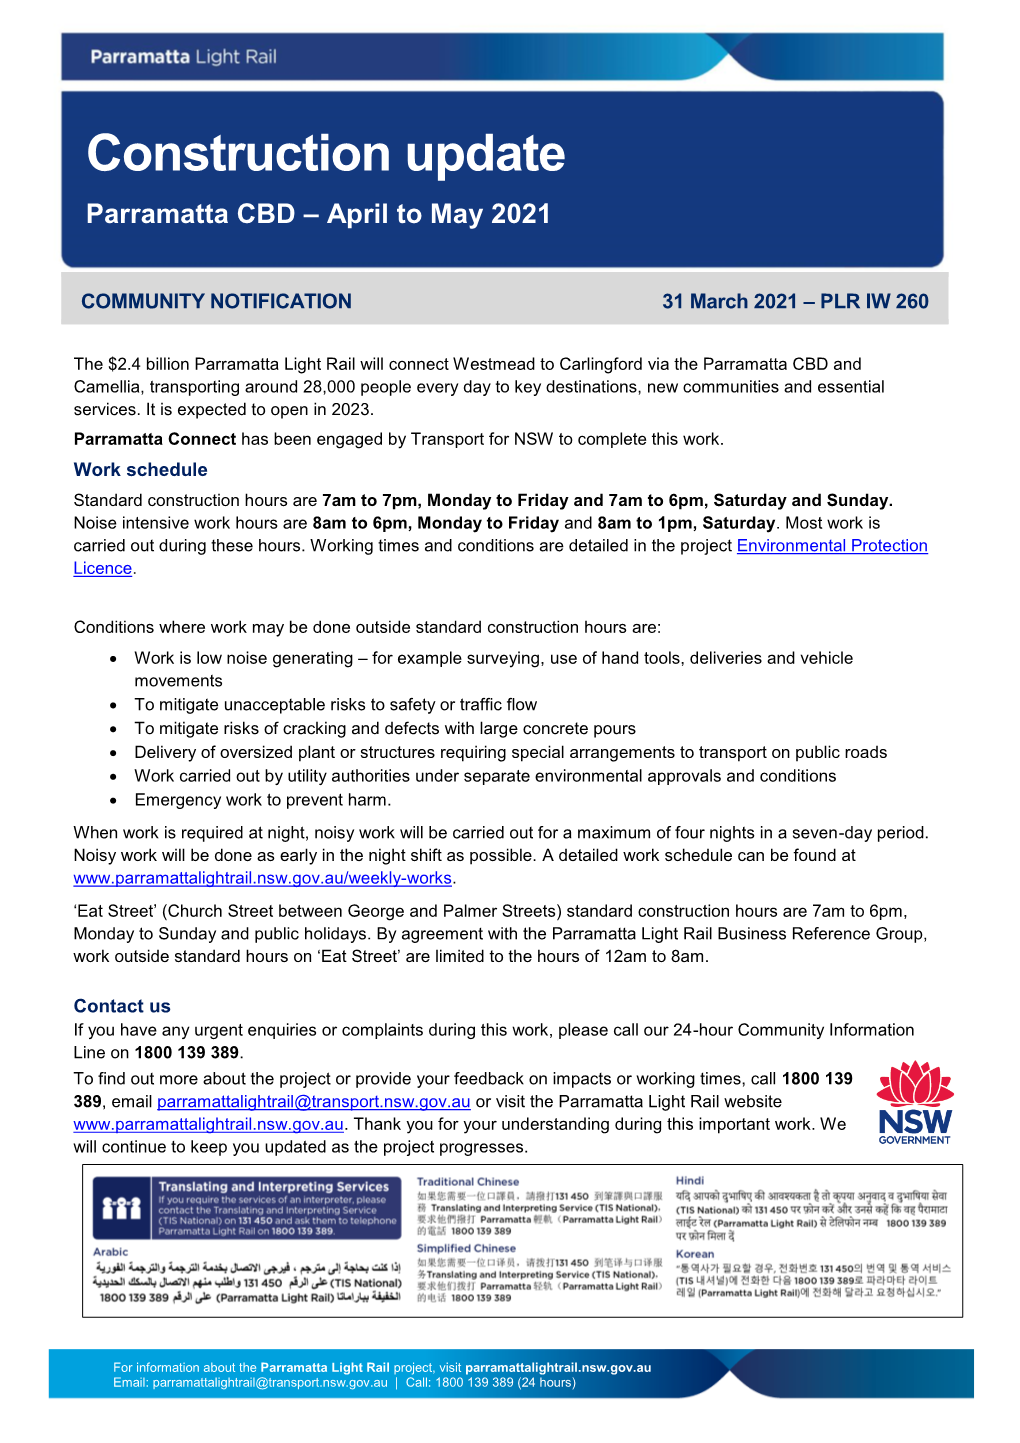 Construction Update: Parramatta CBD- April to May 2021